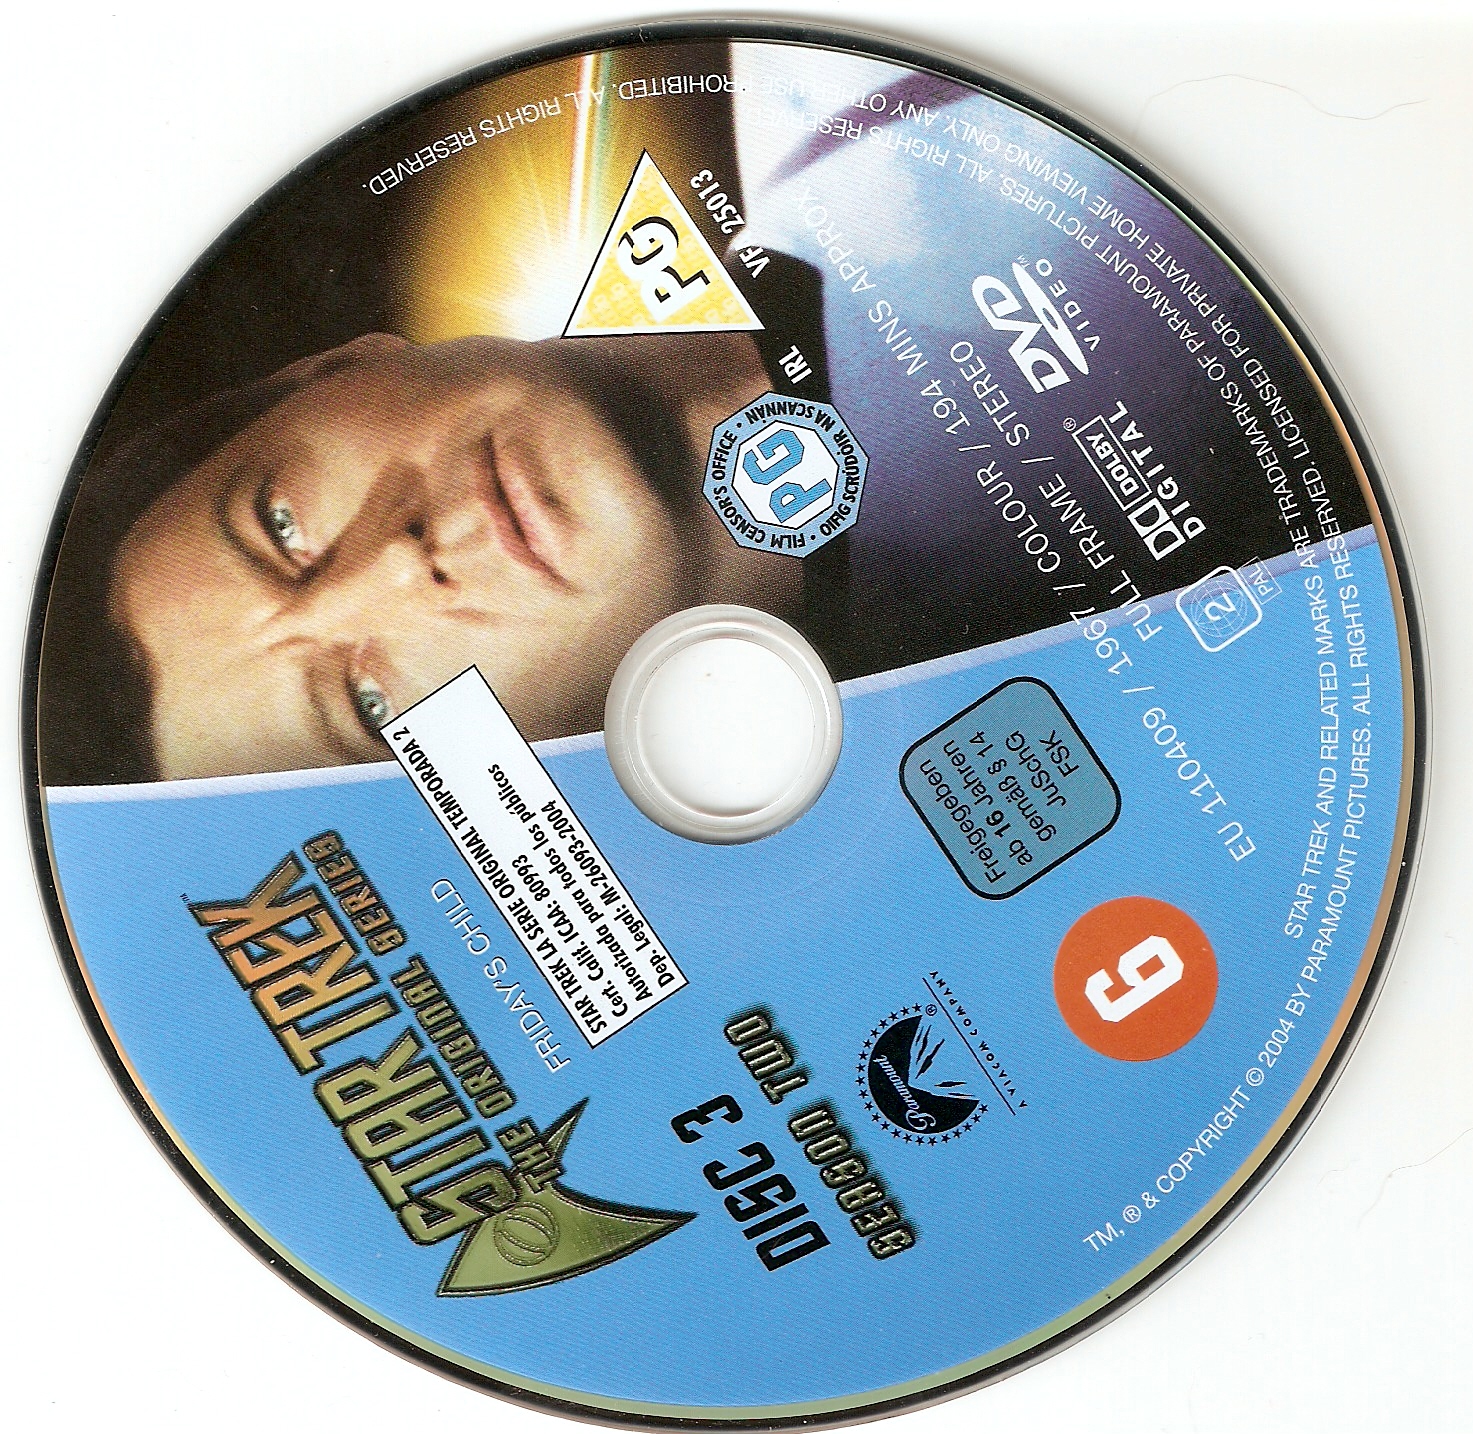 Star trek saison 2 DVD 3